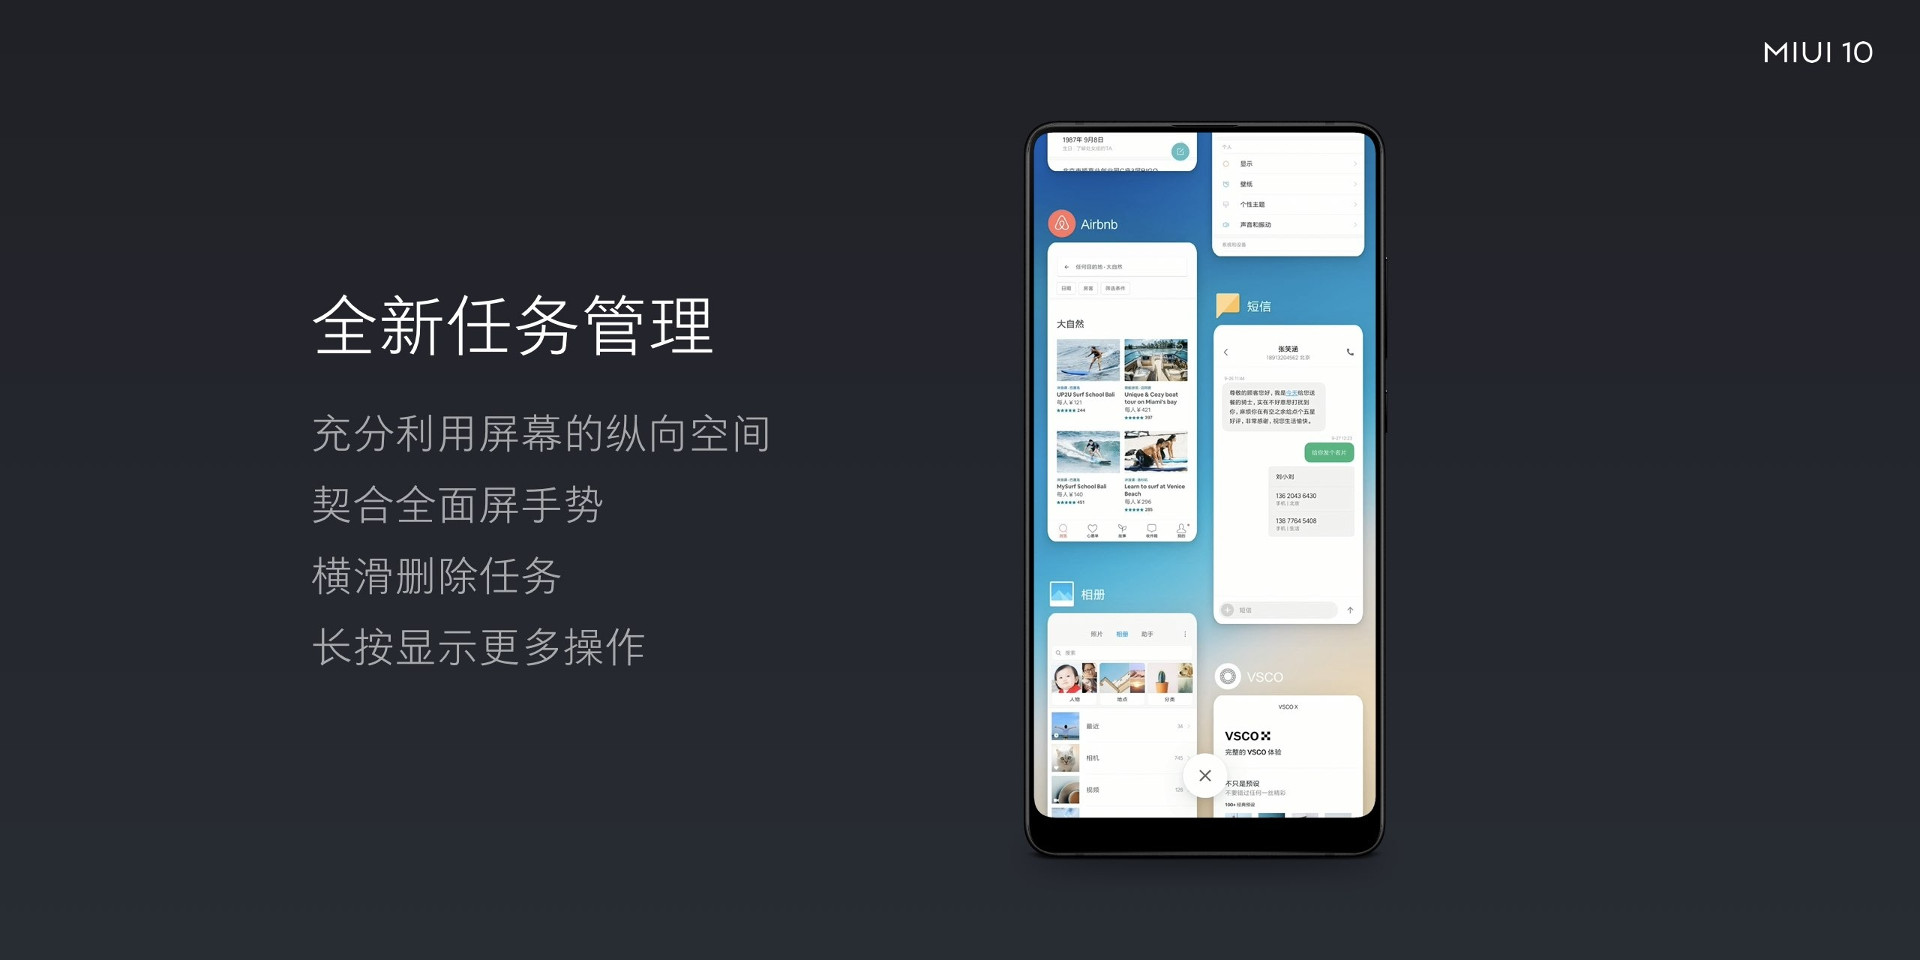 MIUI 10 from Xiaomi.